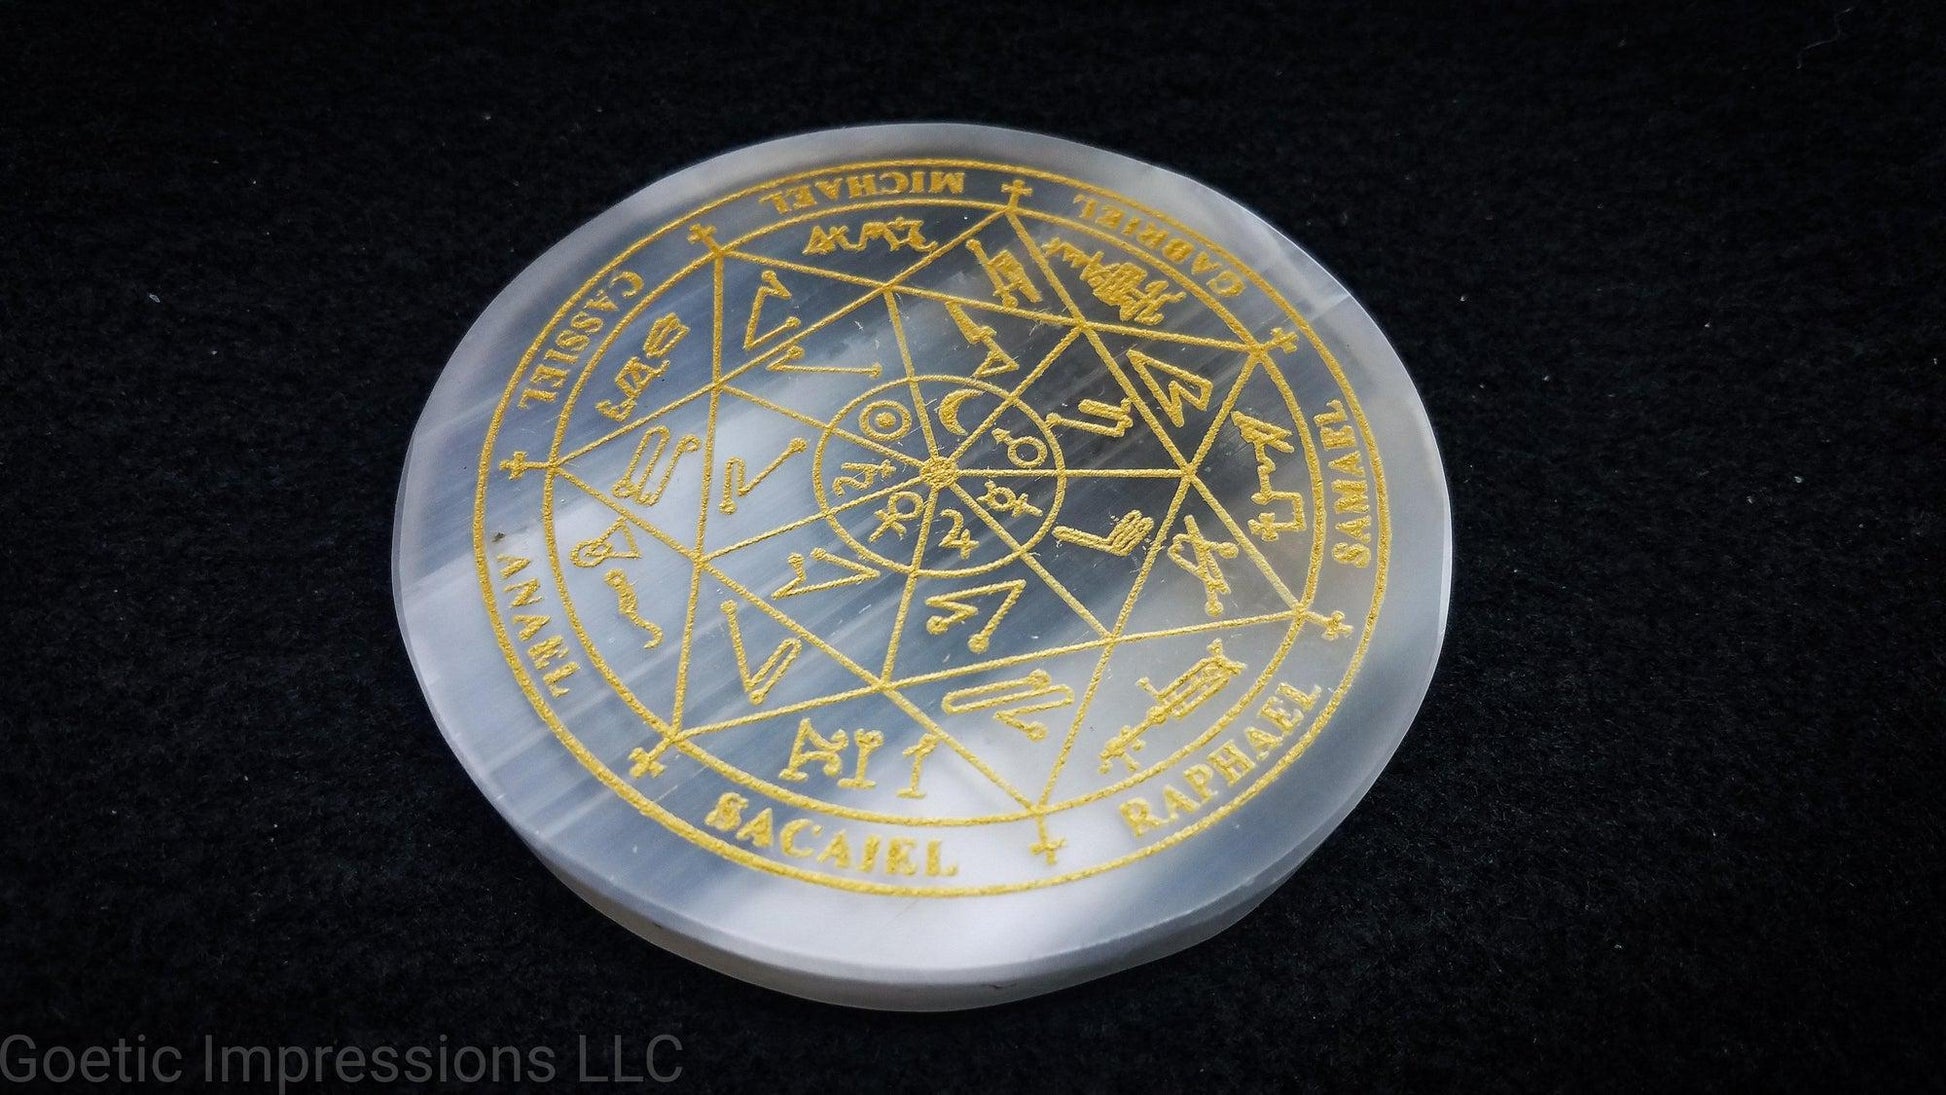 7 Planetary Archangel Seal selenite charging plate